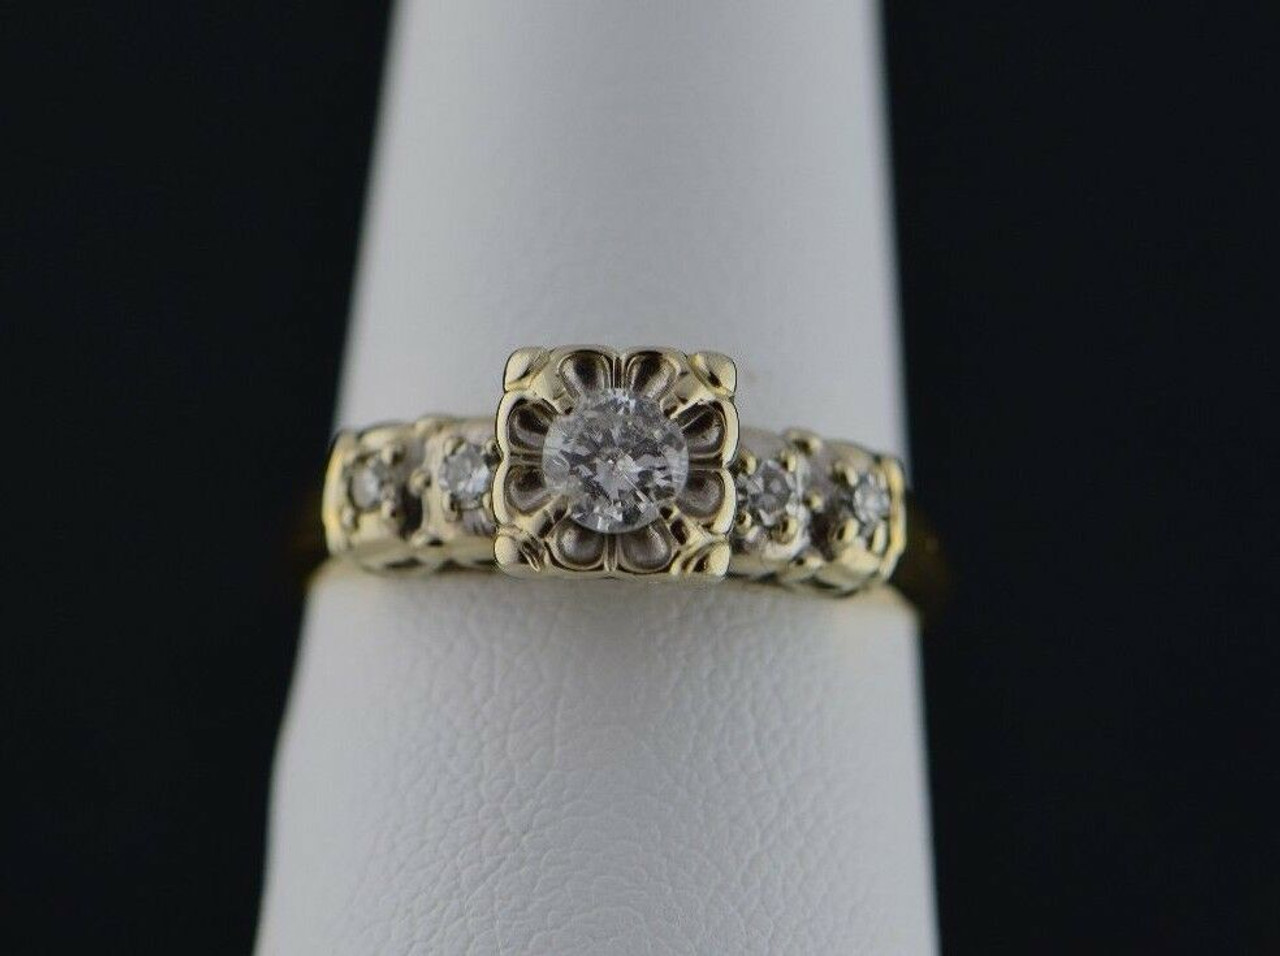 Vintage CA 1940s Era 14k White Gold Approx .12ct TW Round Brilliant Cut Diamond  Ring Size